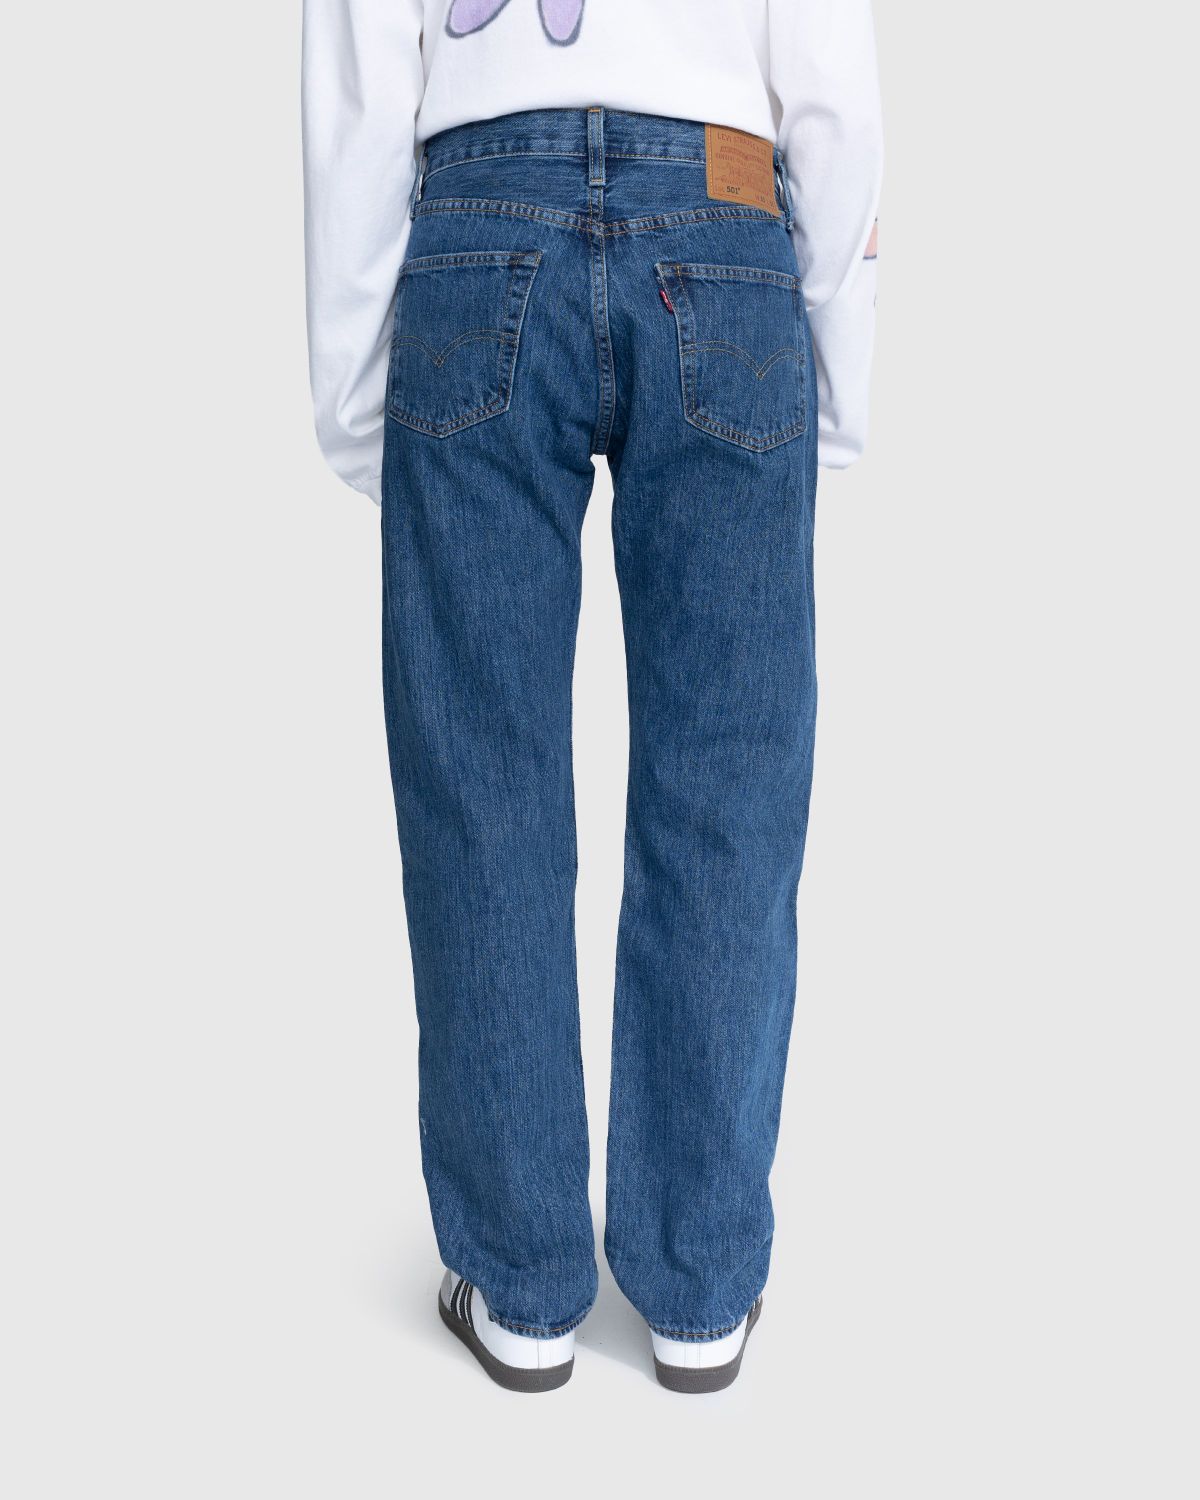 Levi's – 501 Original Fit Indigo Stonewash - Pants - Blue - Image 4